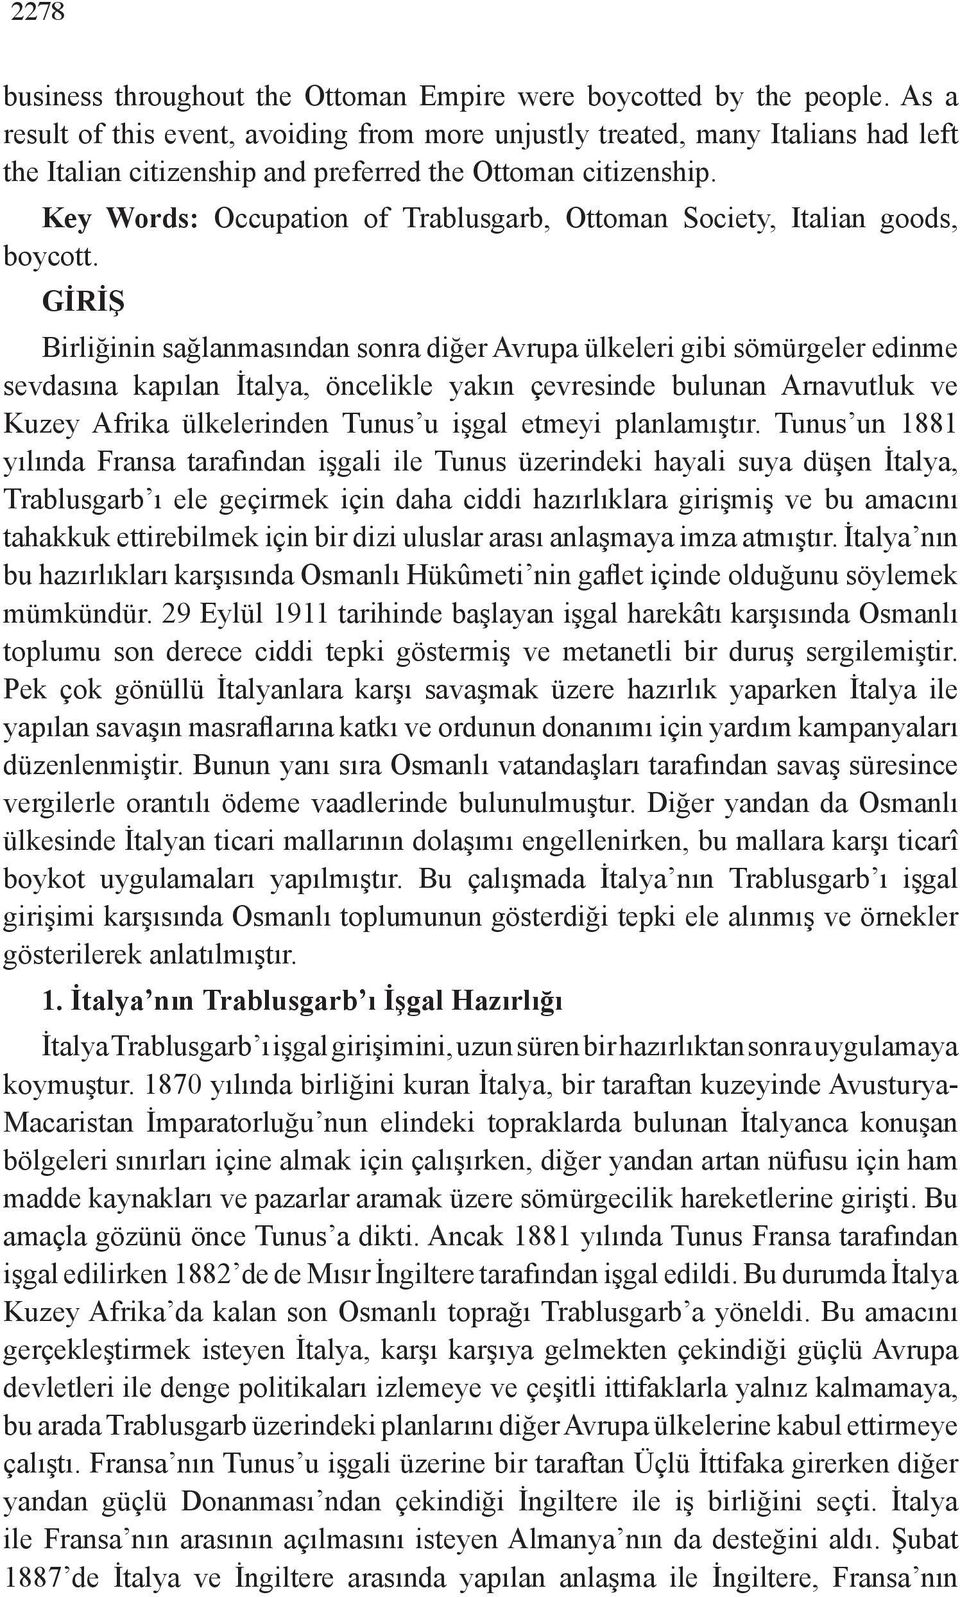 Key Words: Occupation of Trablusgarb, Ottoman Society, Italian goods, boycott.